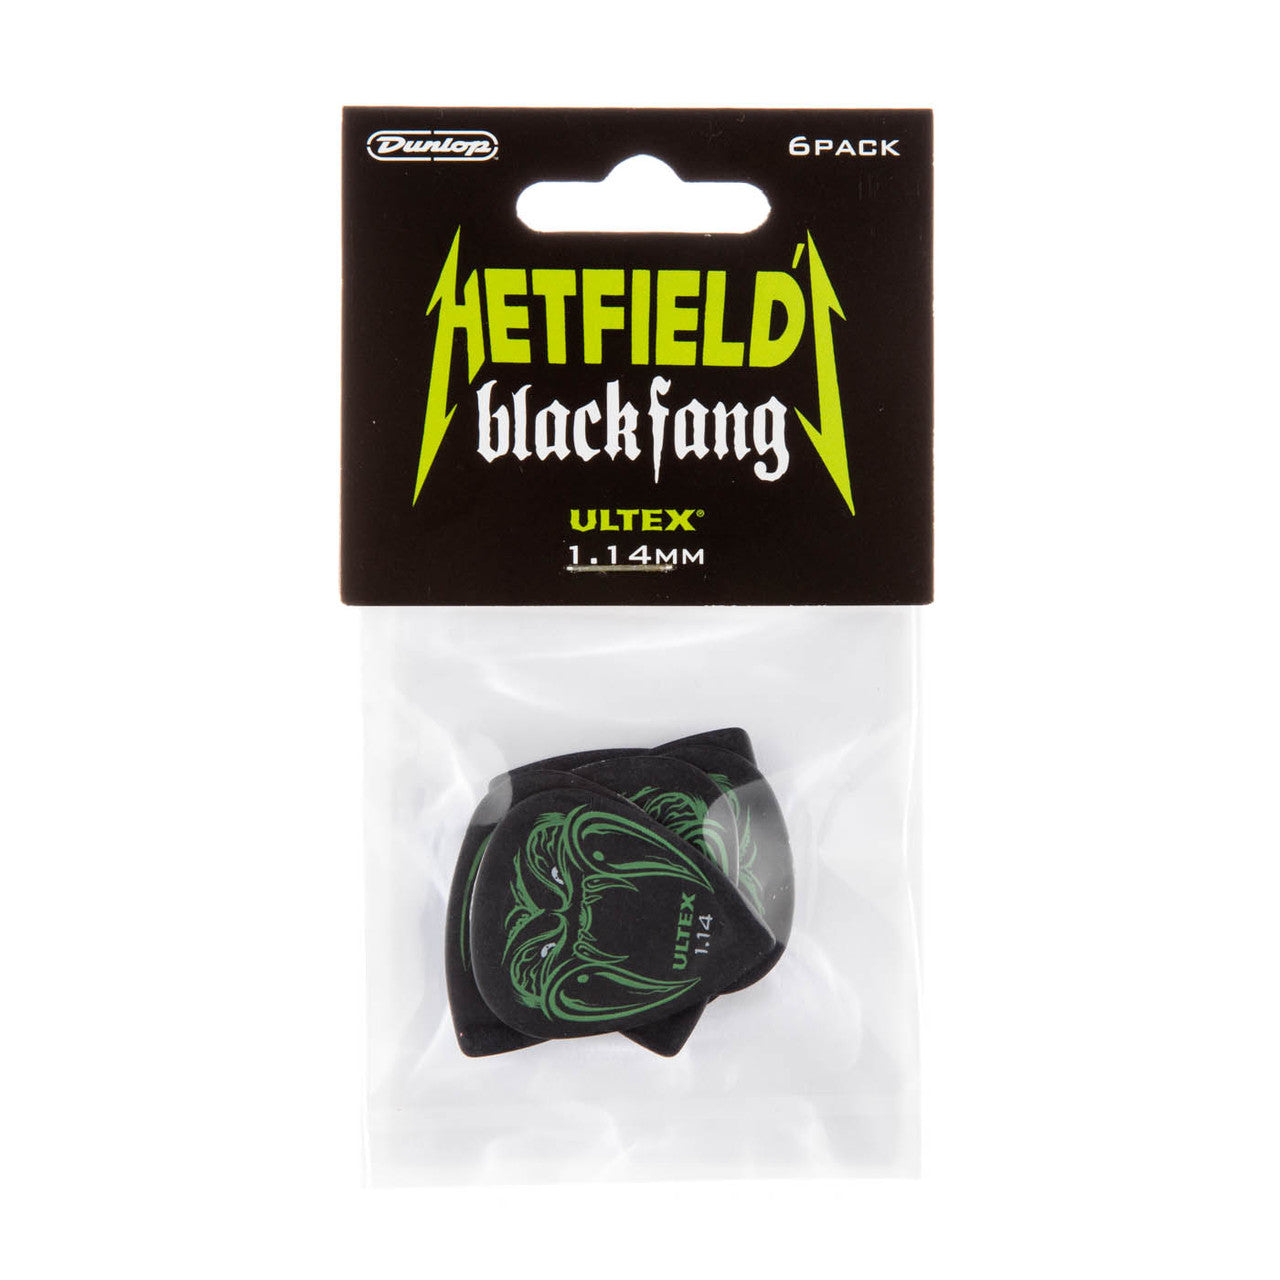 Dunlop Artist Series | Hetfield's Black Fang™ Pick 1.14mm Gauge | 6-Pack